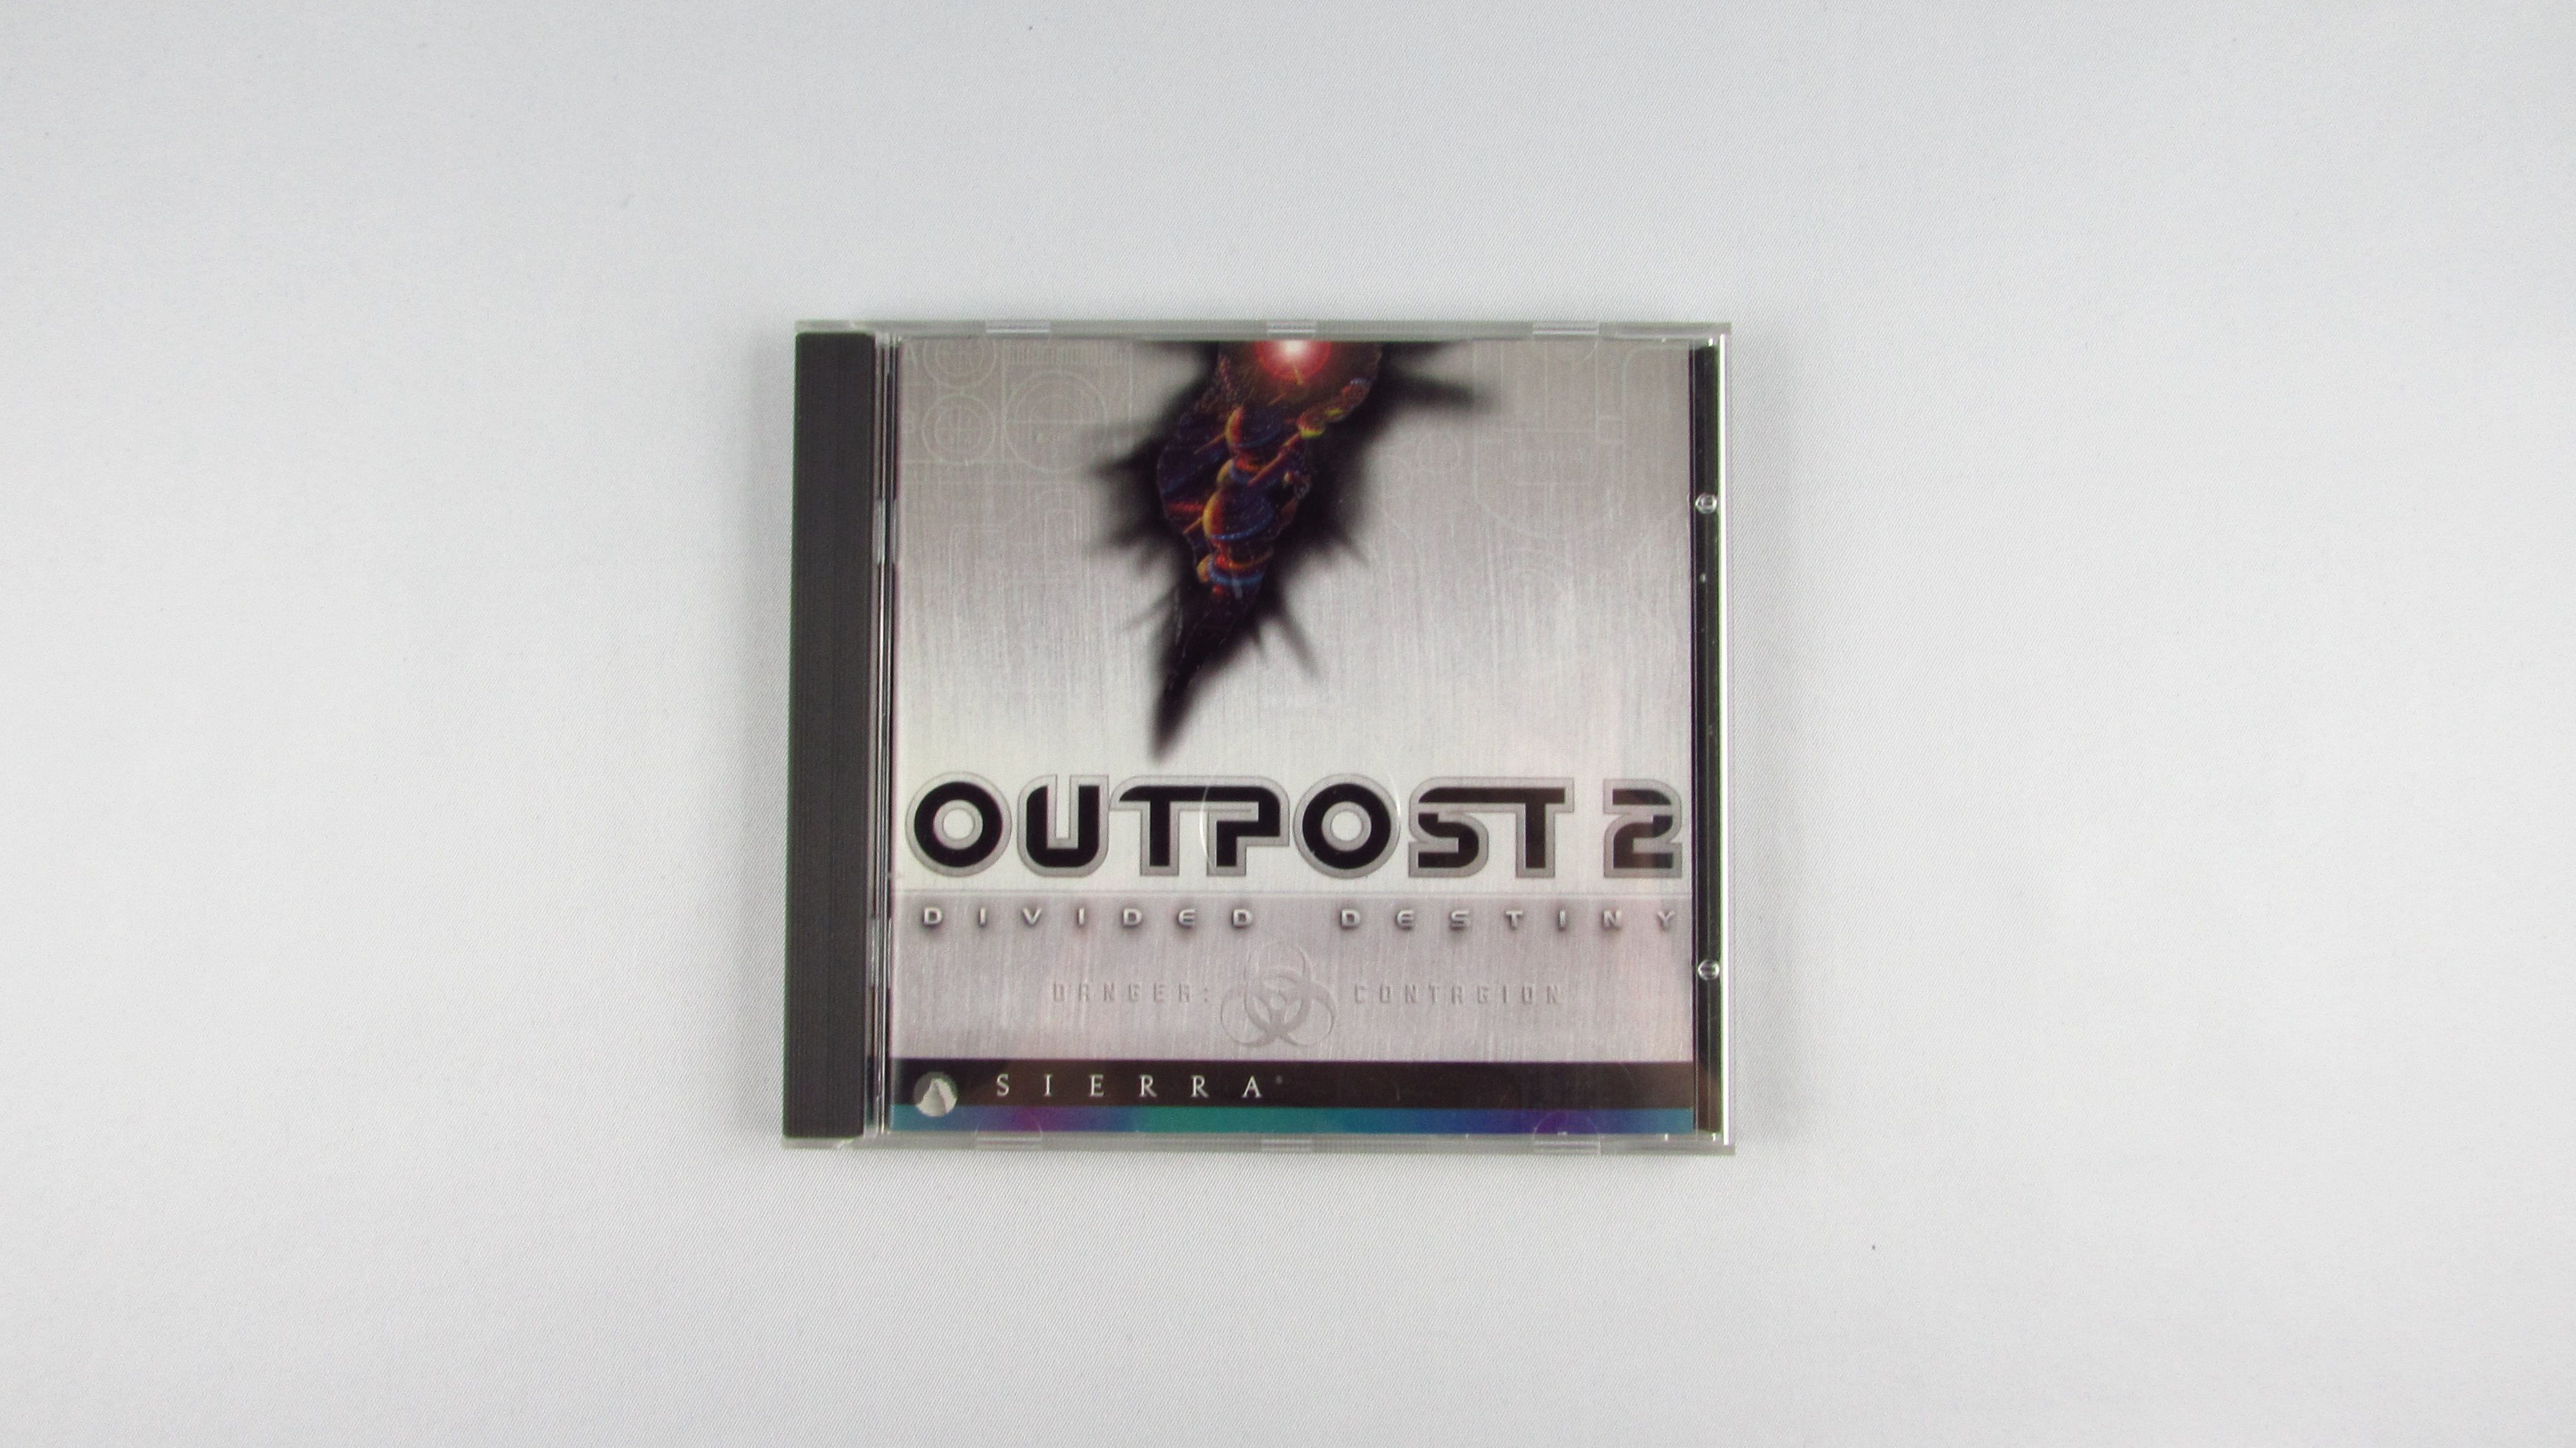 SIERRA - Outpost 2 Divided Destiny Gra PC 1997 r.